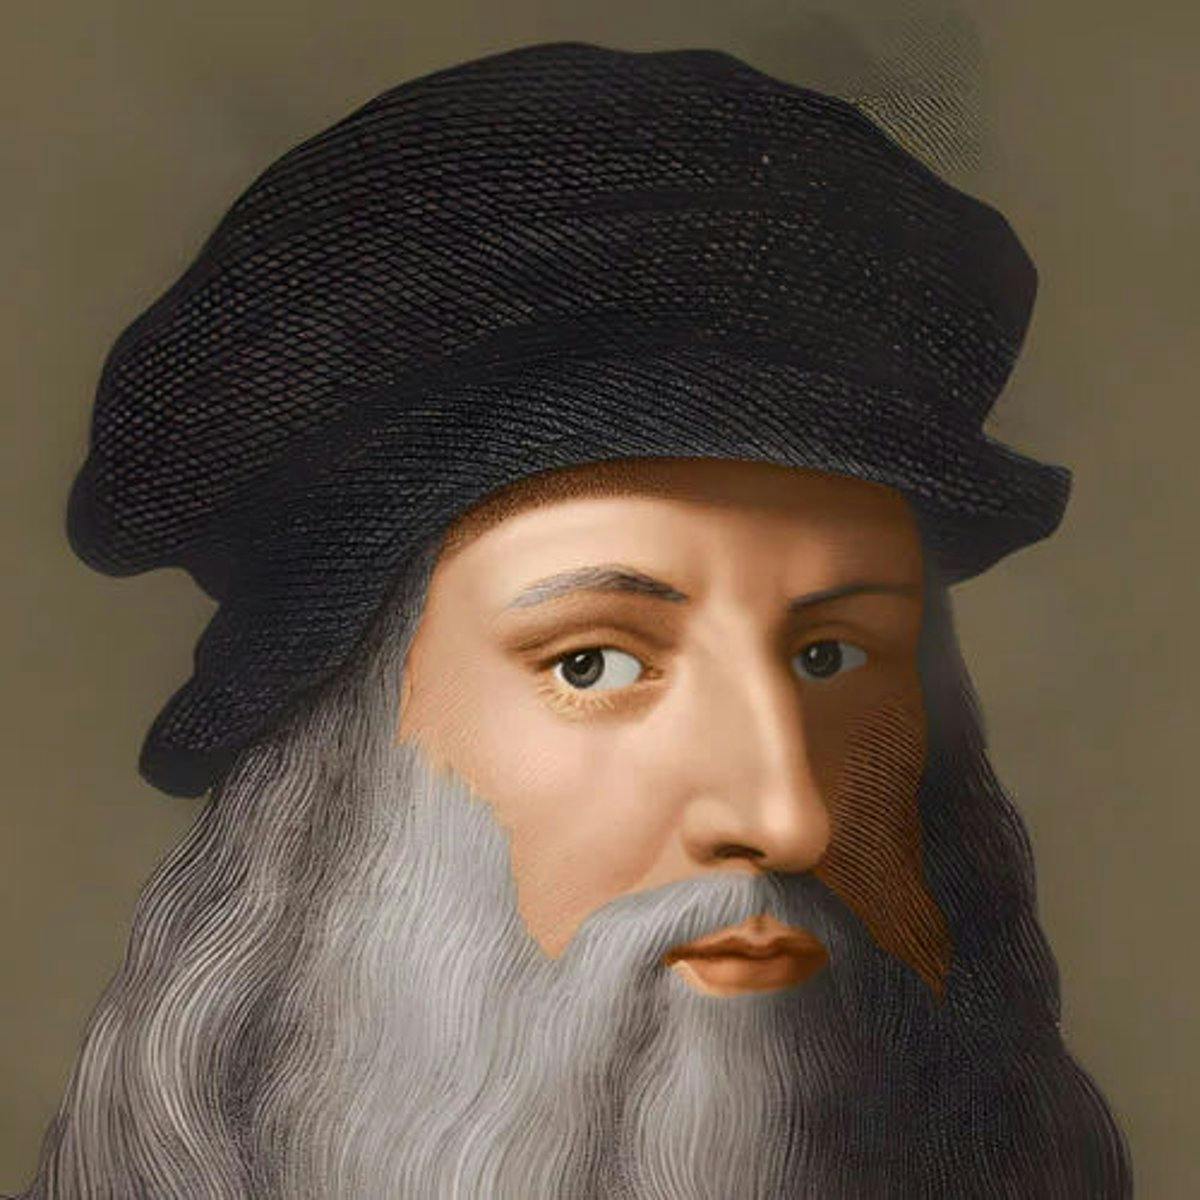 Leonardo da Vinci (Polymath)